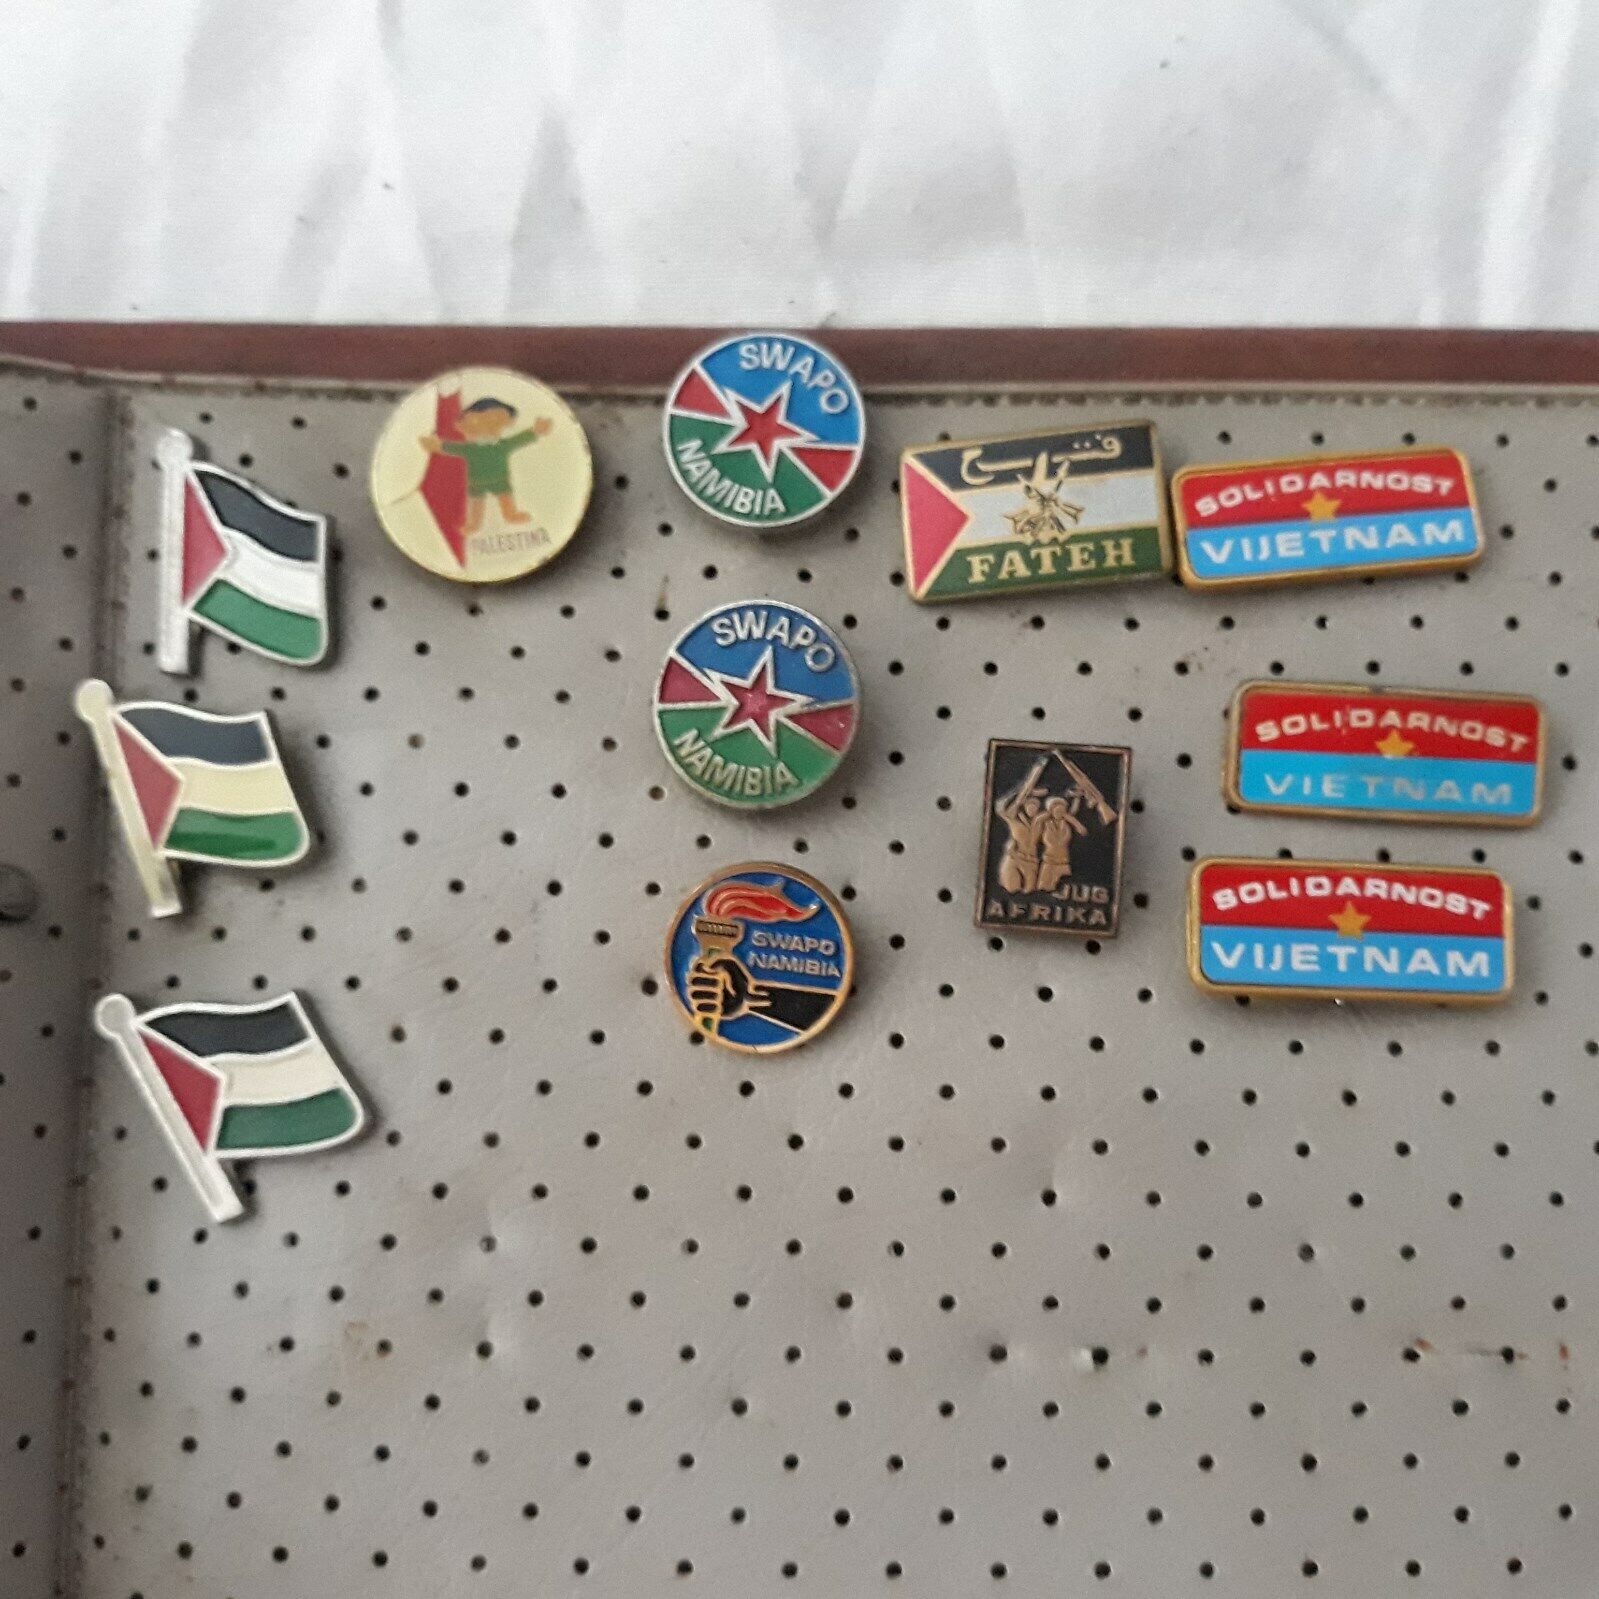 lot of 12 old vintage pins of liberation organization SWAPO Namibia,Palestina...